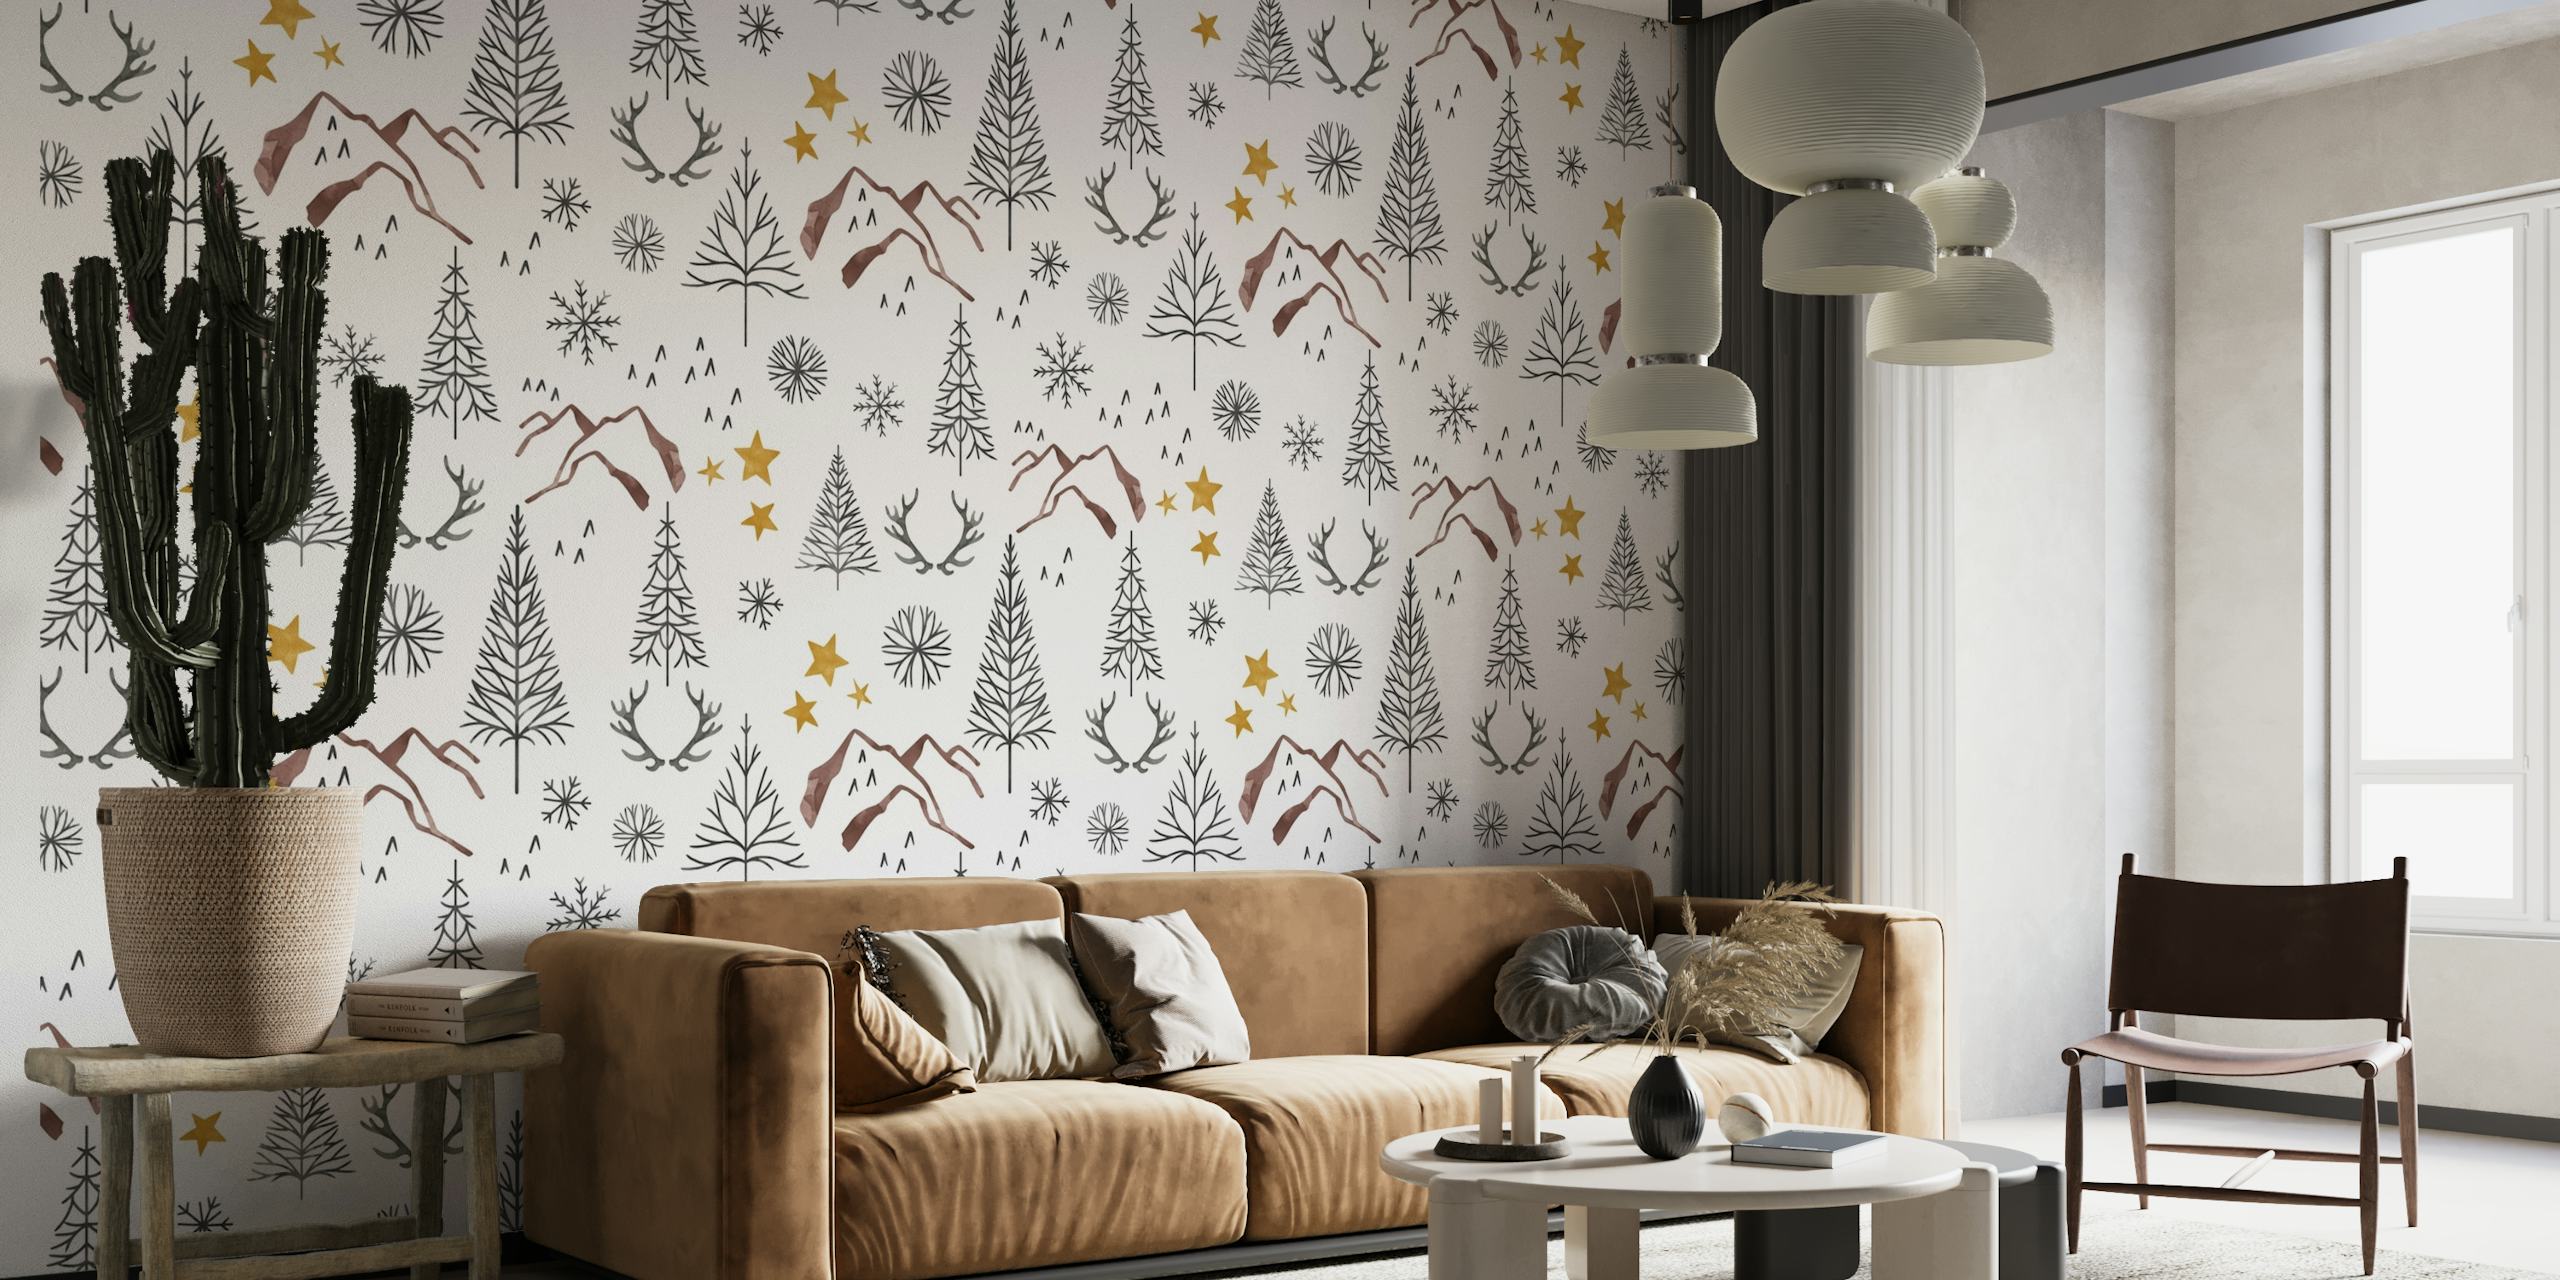 Modern Farmhouse I Wallpaper featuring snowy reindeer forest scene